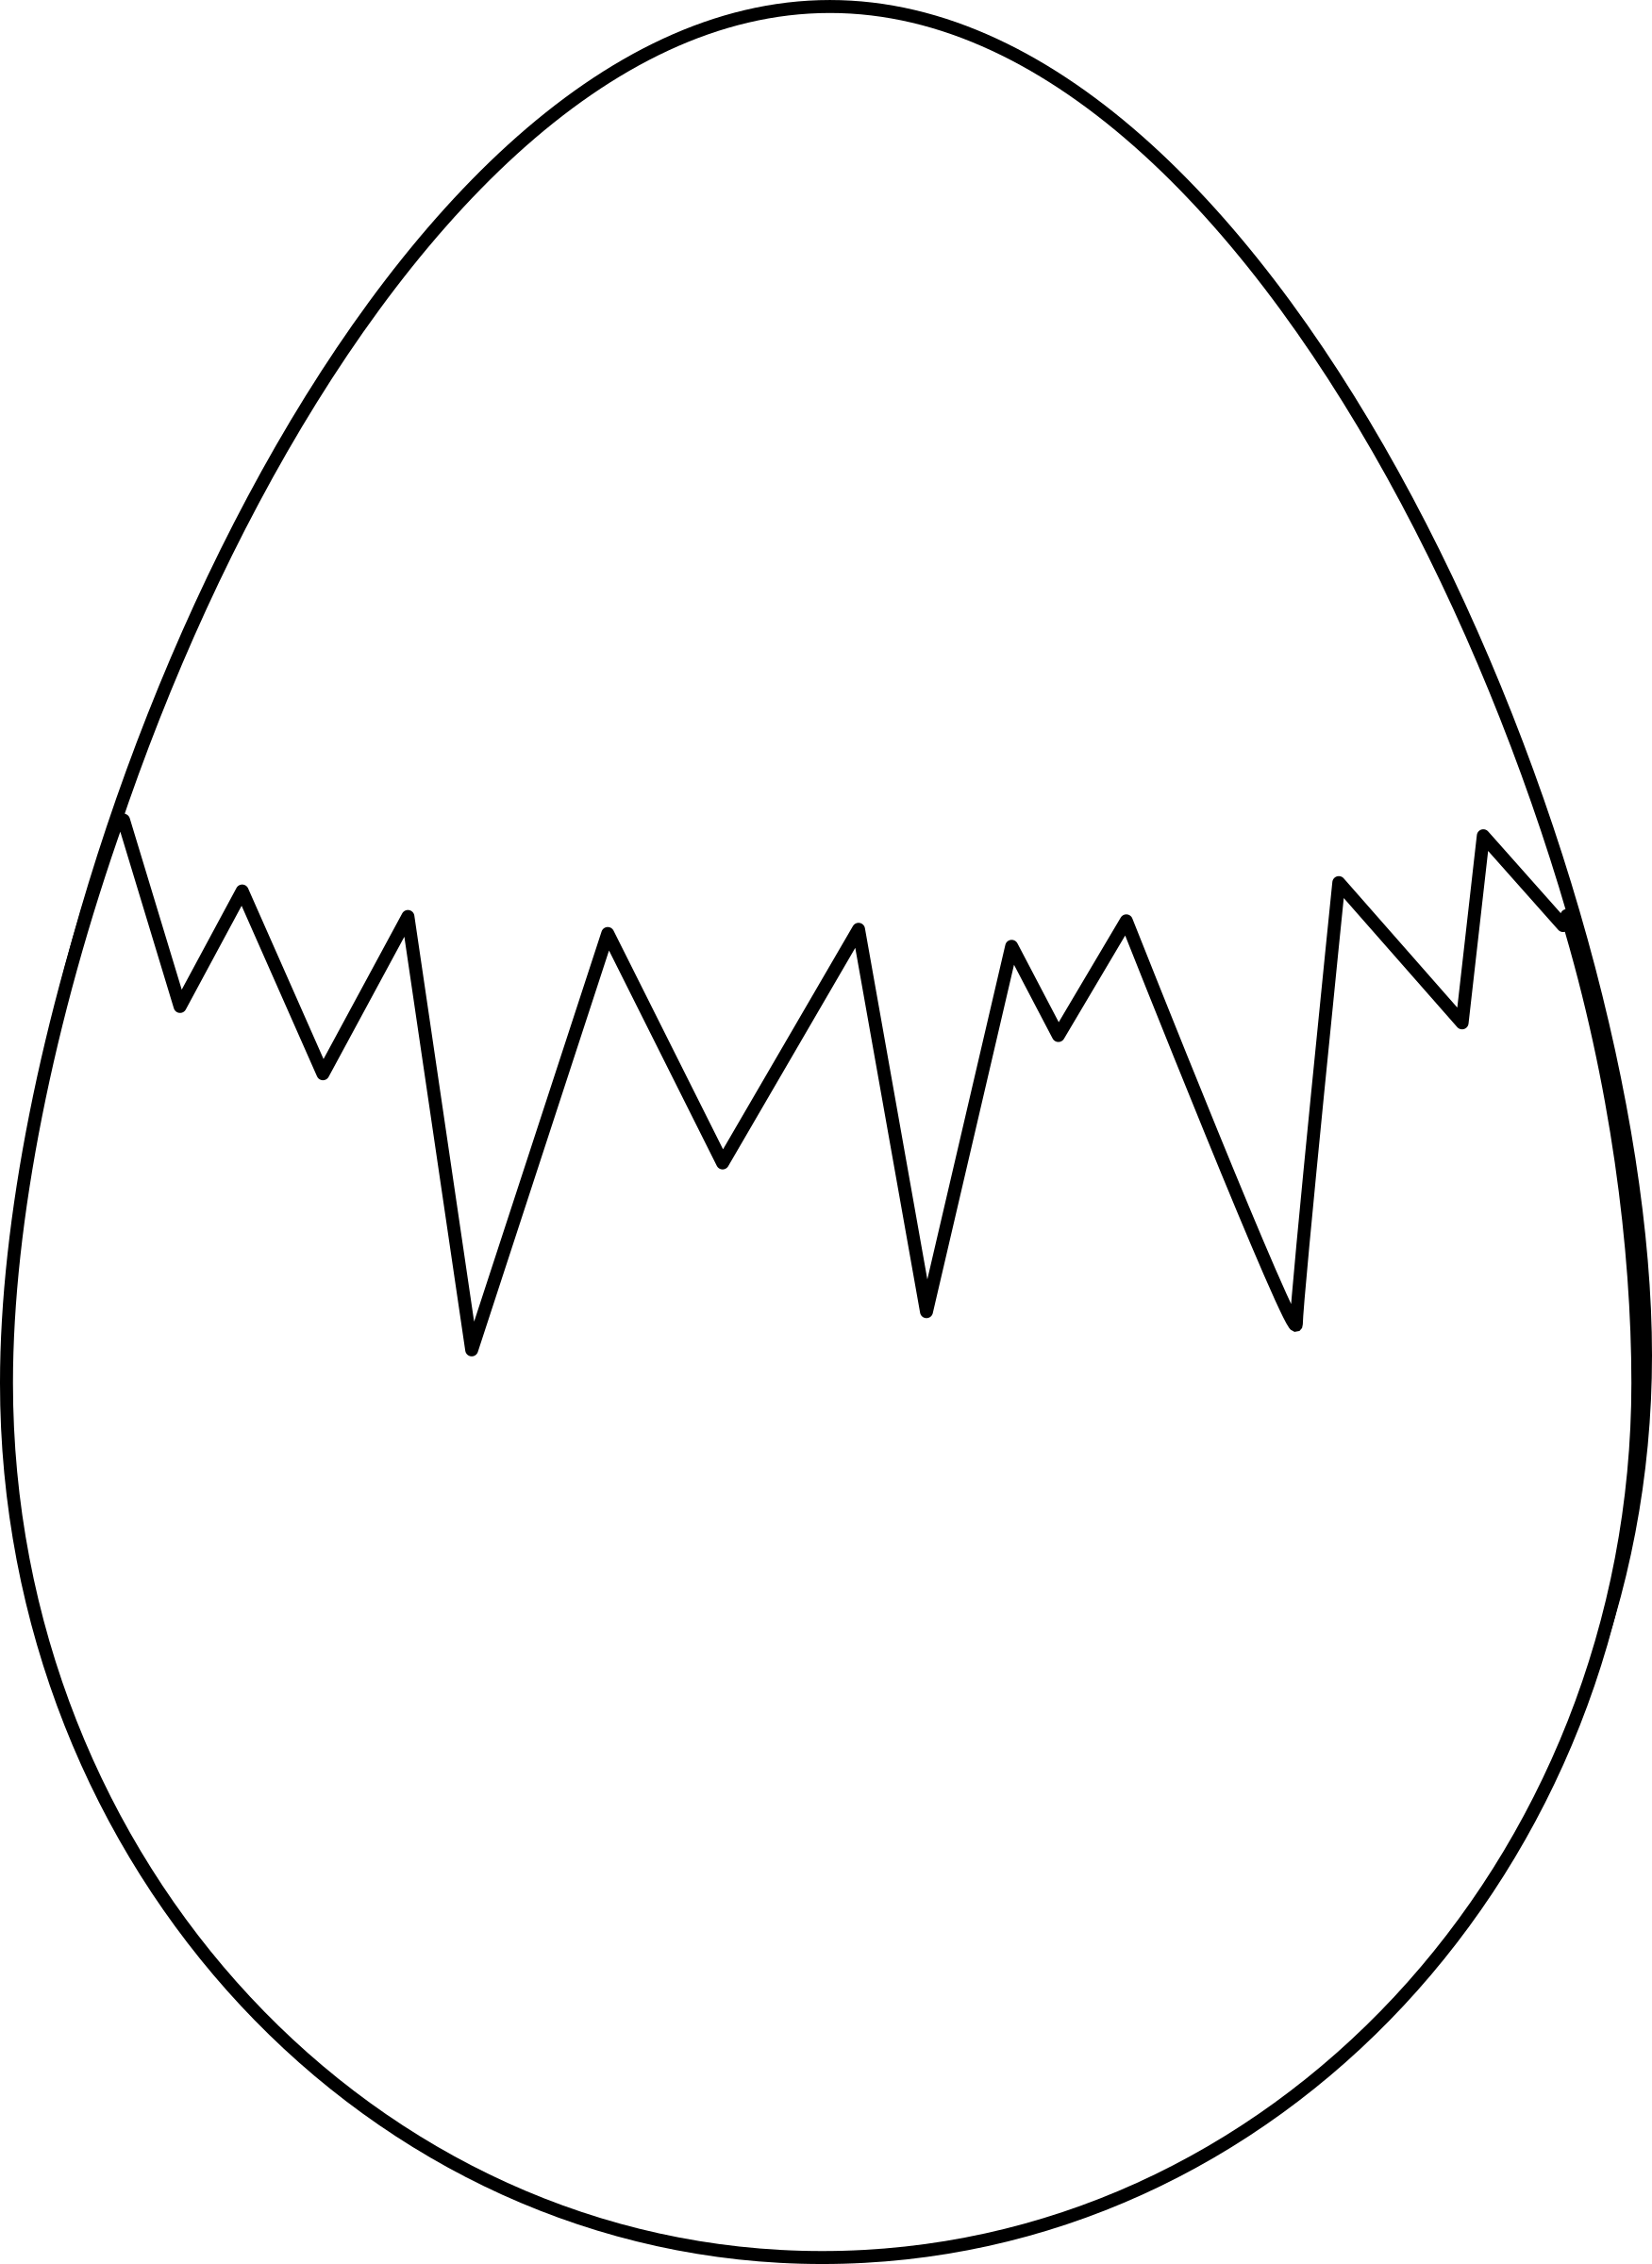 Яйцо трафарет для вырезания